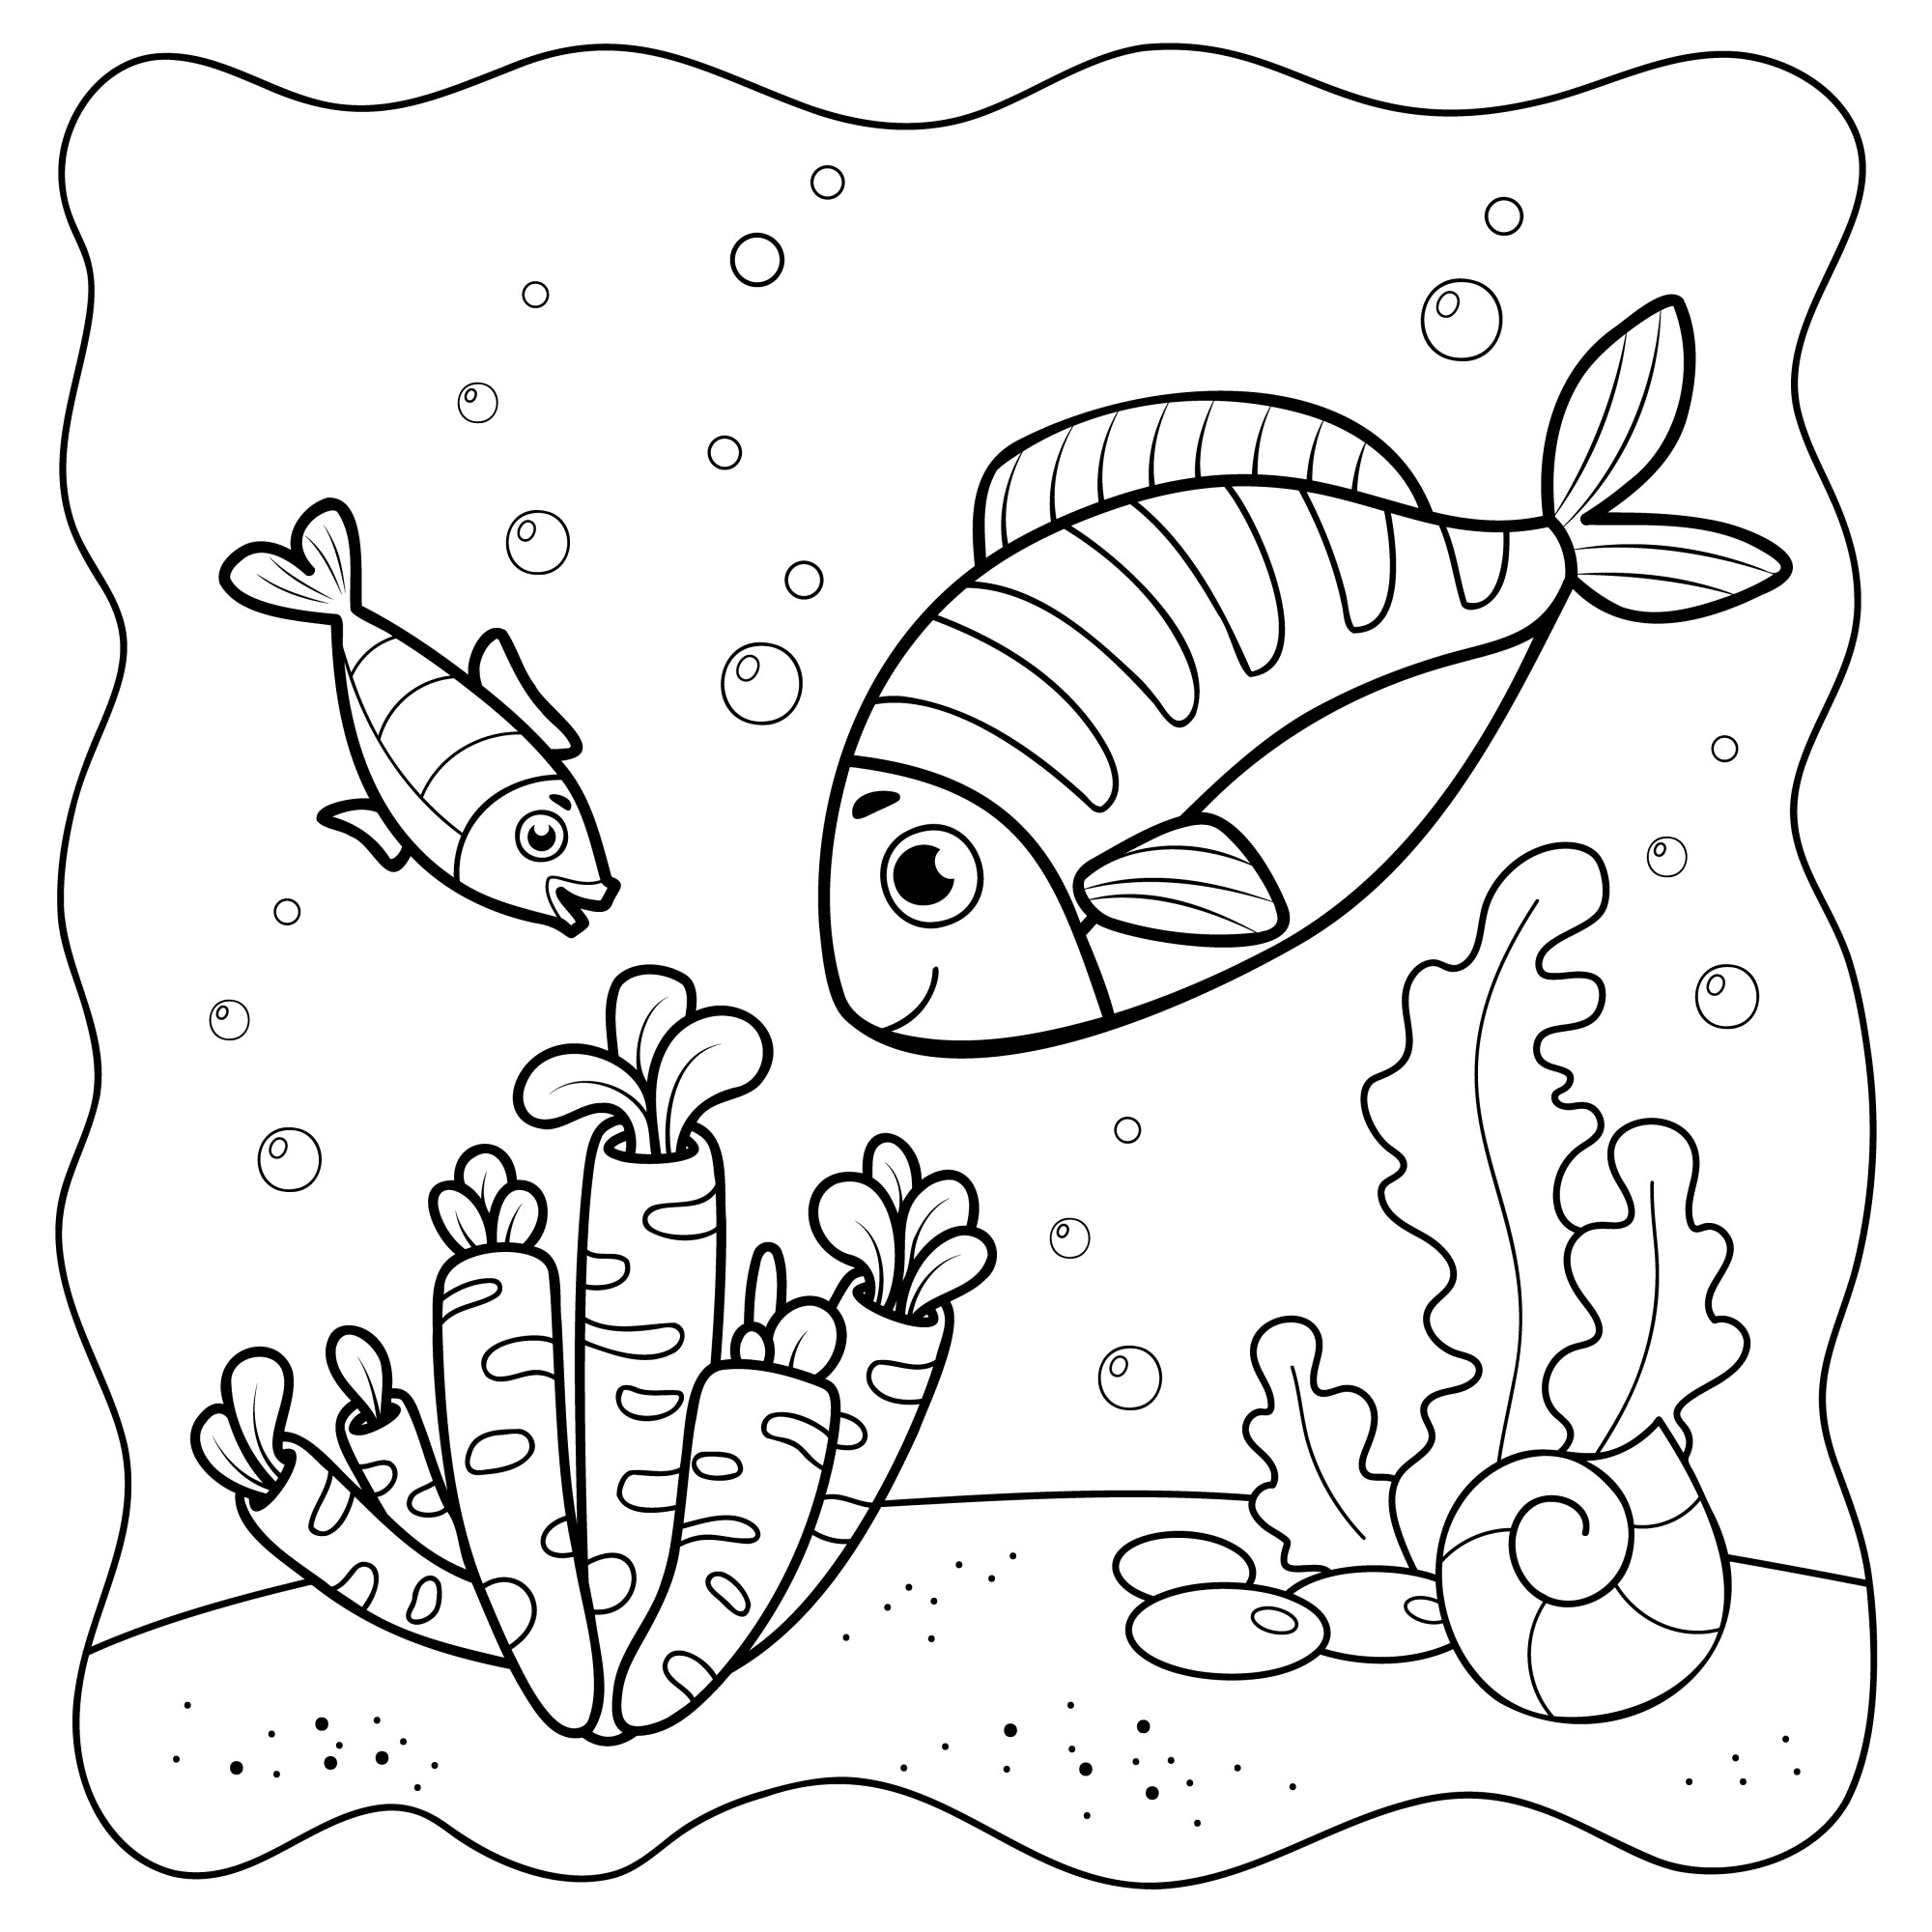 Раскраска для детей: рыбки на дне реки с водорослями